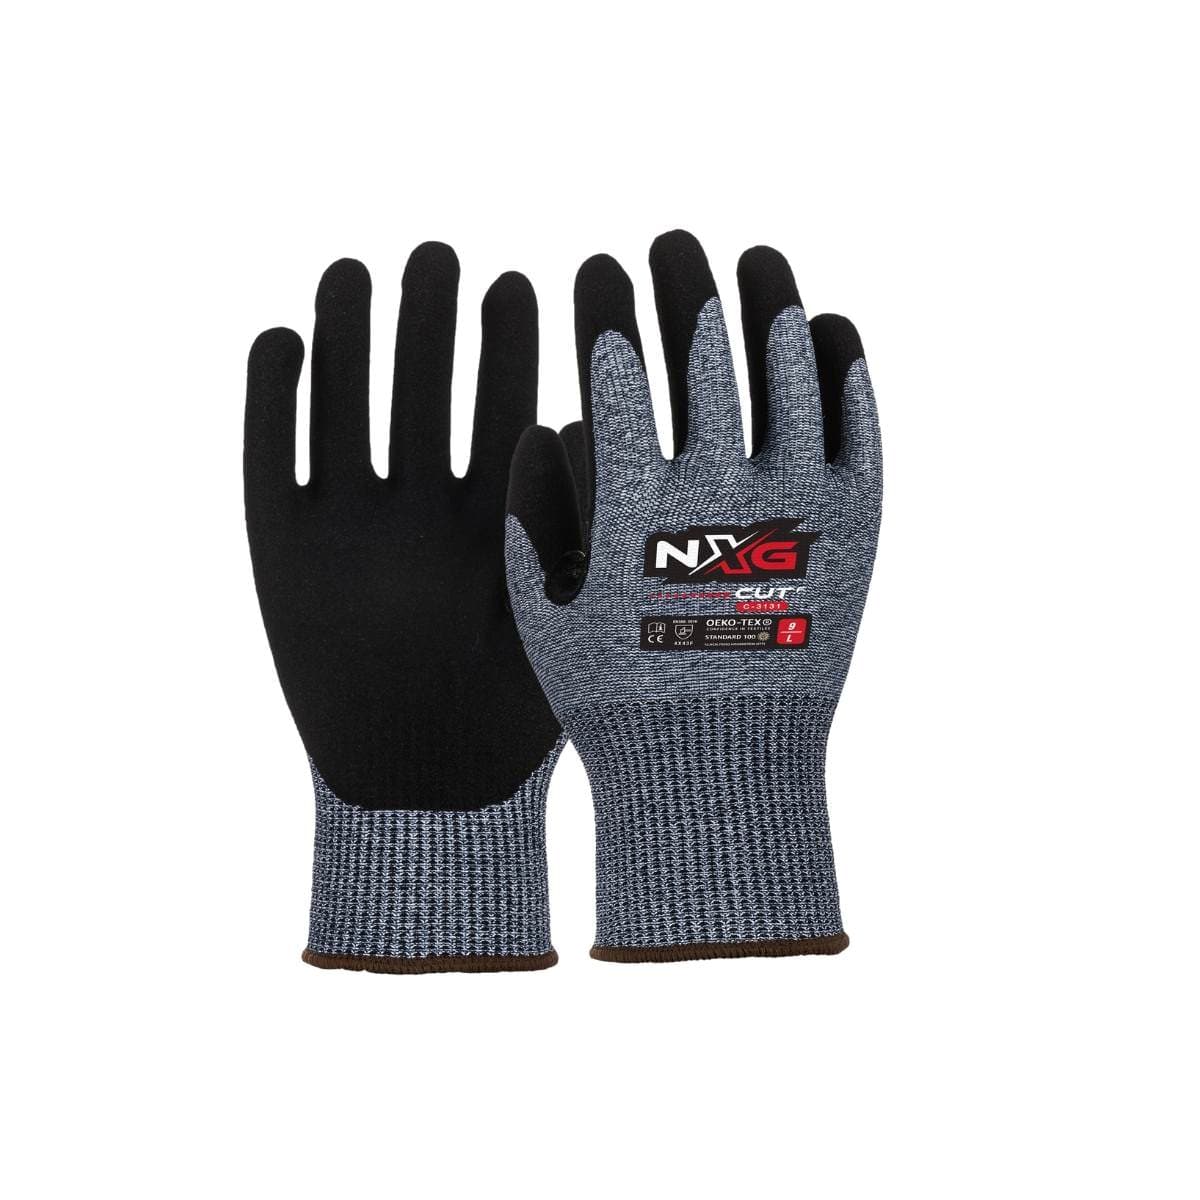 NXG™ Cut F Heavy Duty Nitrile Gloves C-3131 (Pack Of 12)